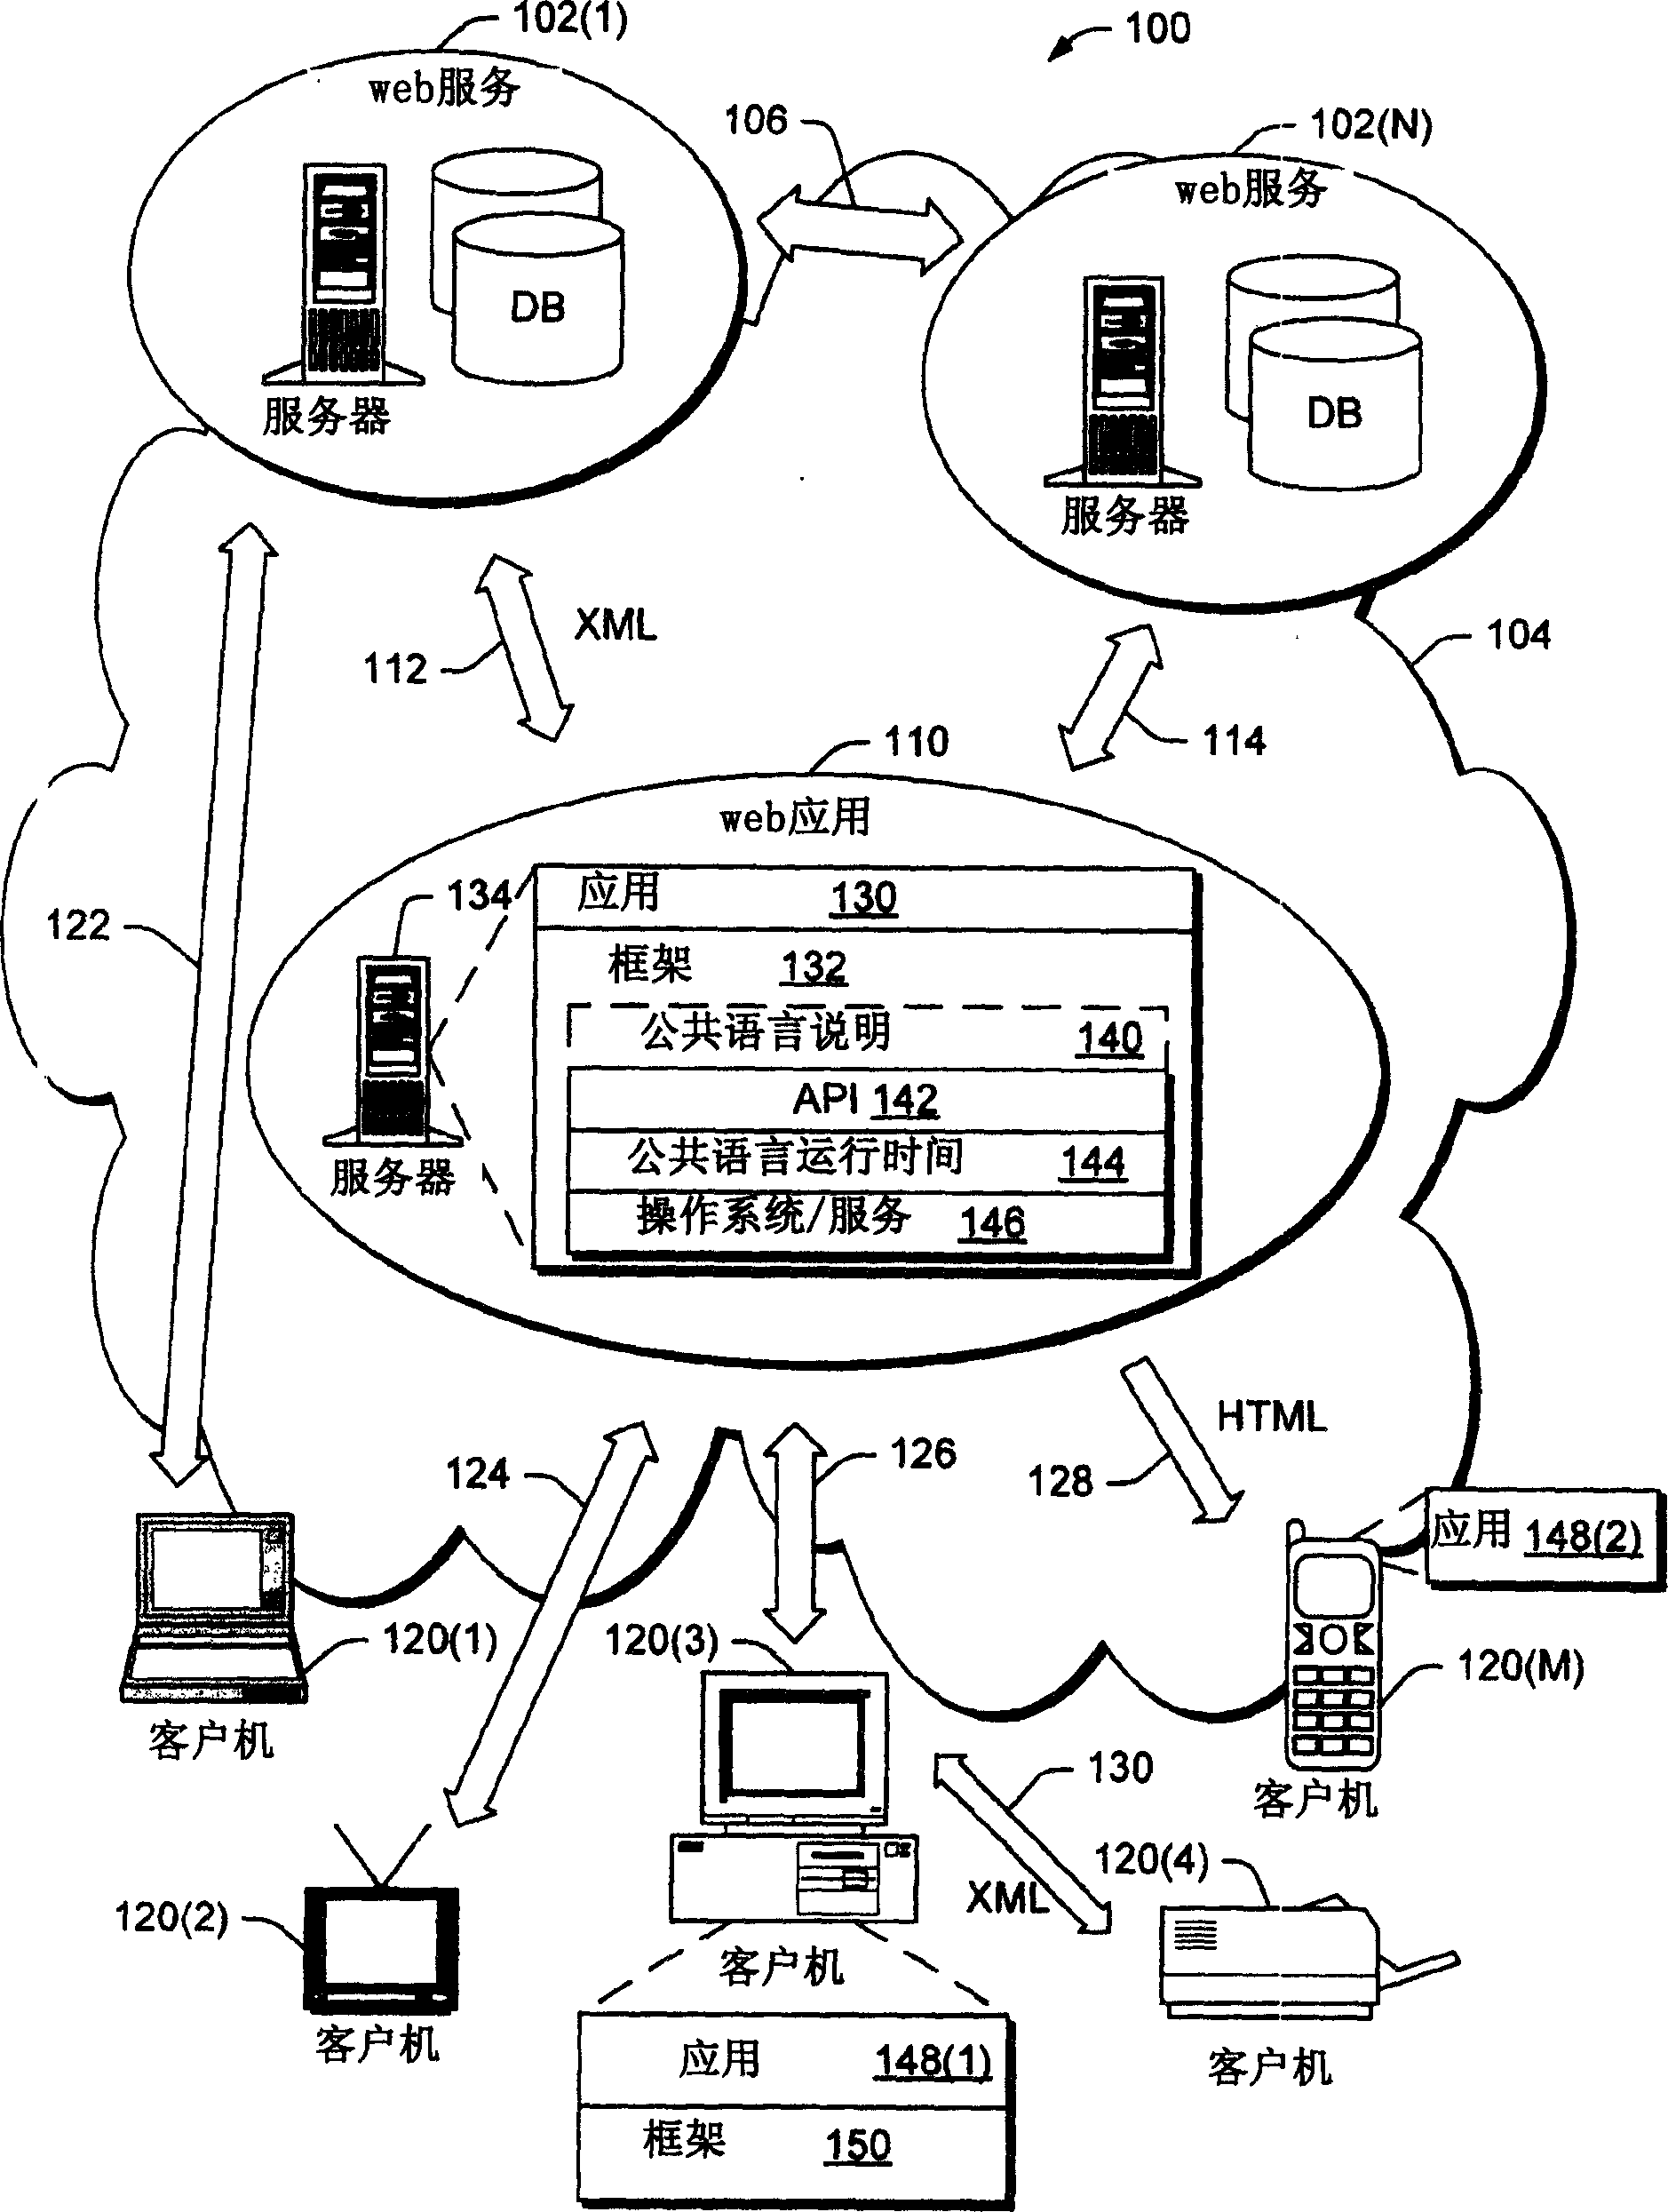 Programming interface for a computer platform